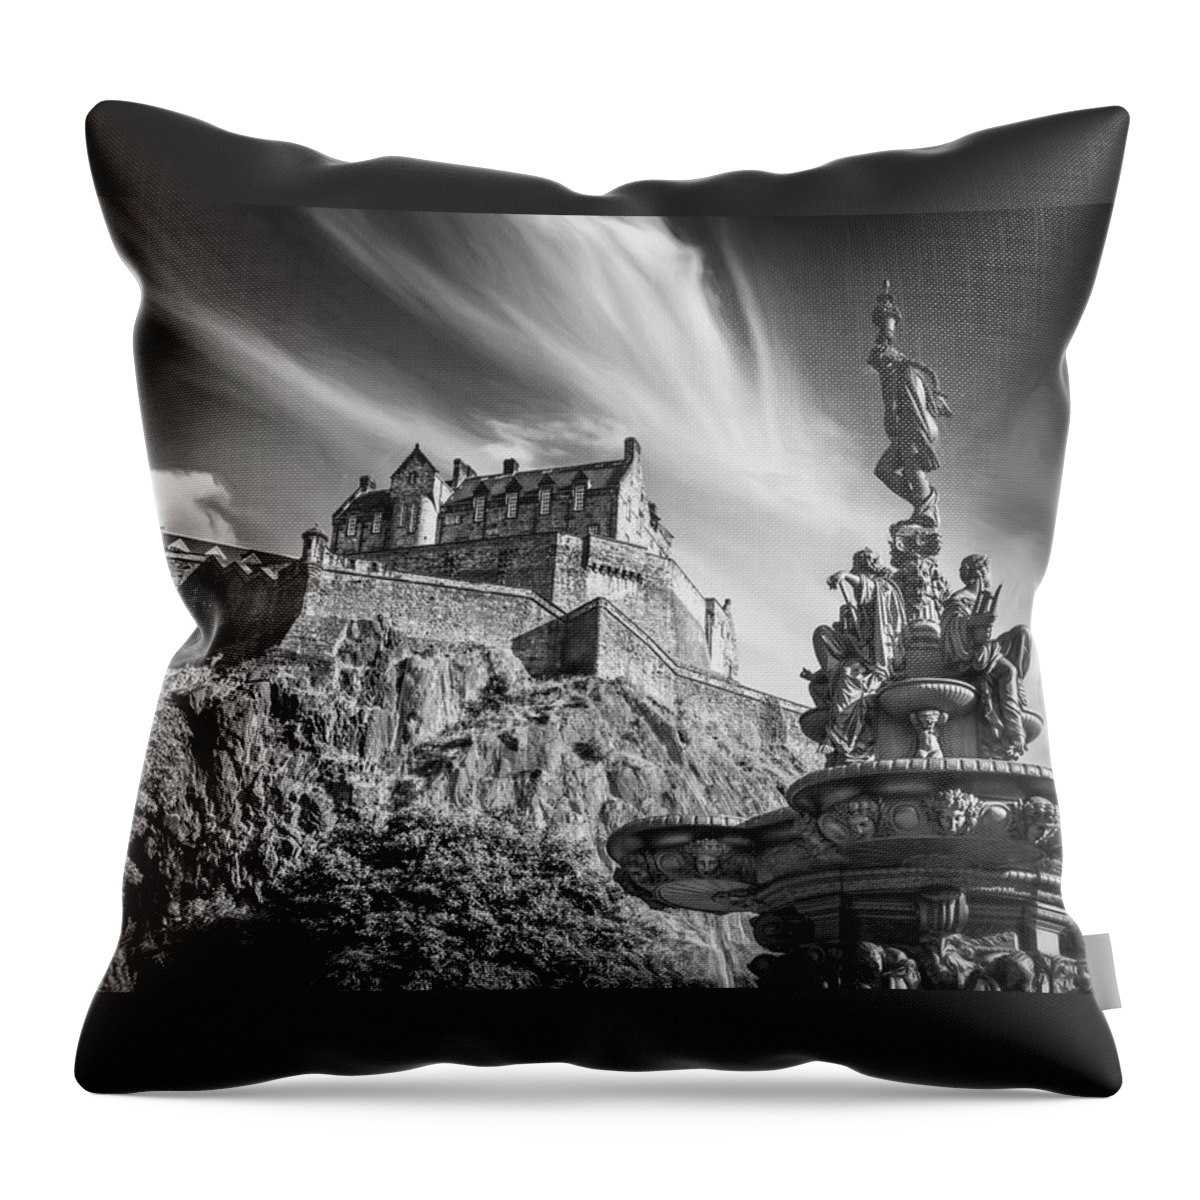 Edinburgh Castle Throw Pillow featuring the photograph Edinburgh Castle Scotland Black and White by Carol Japp